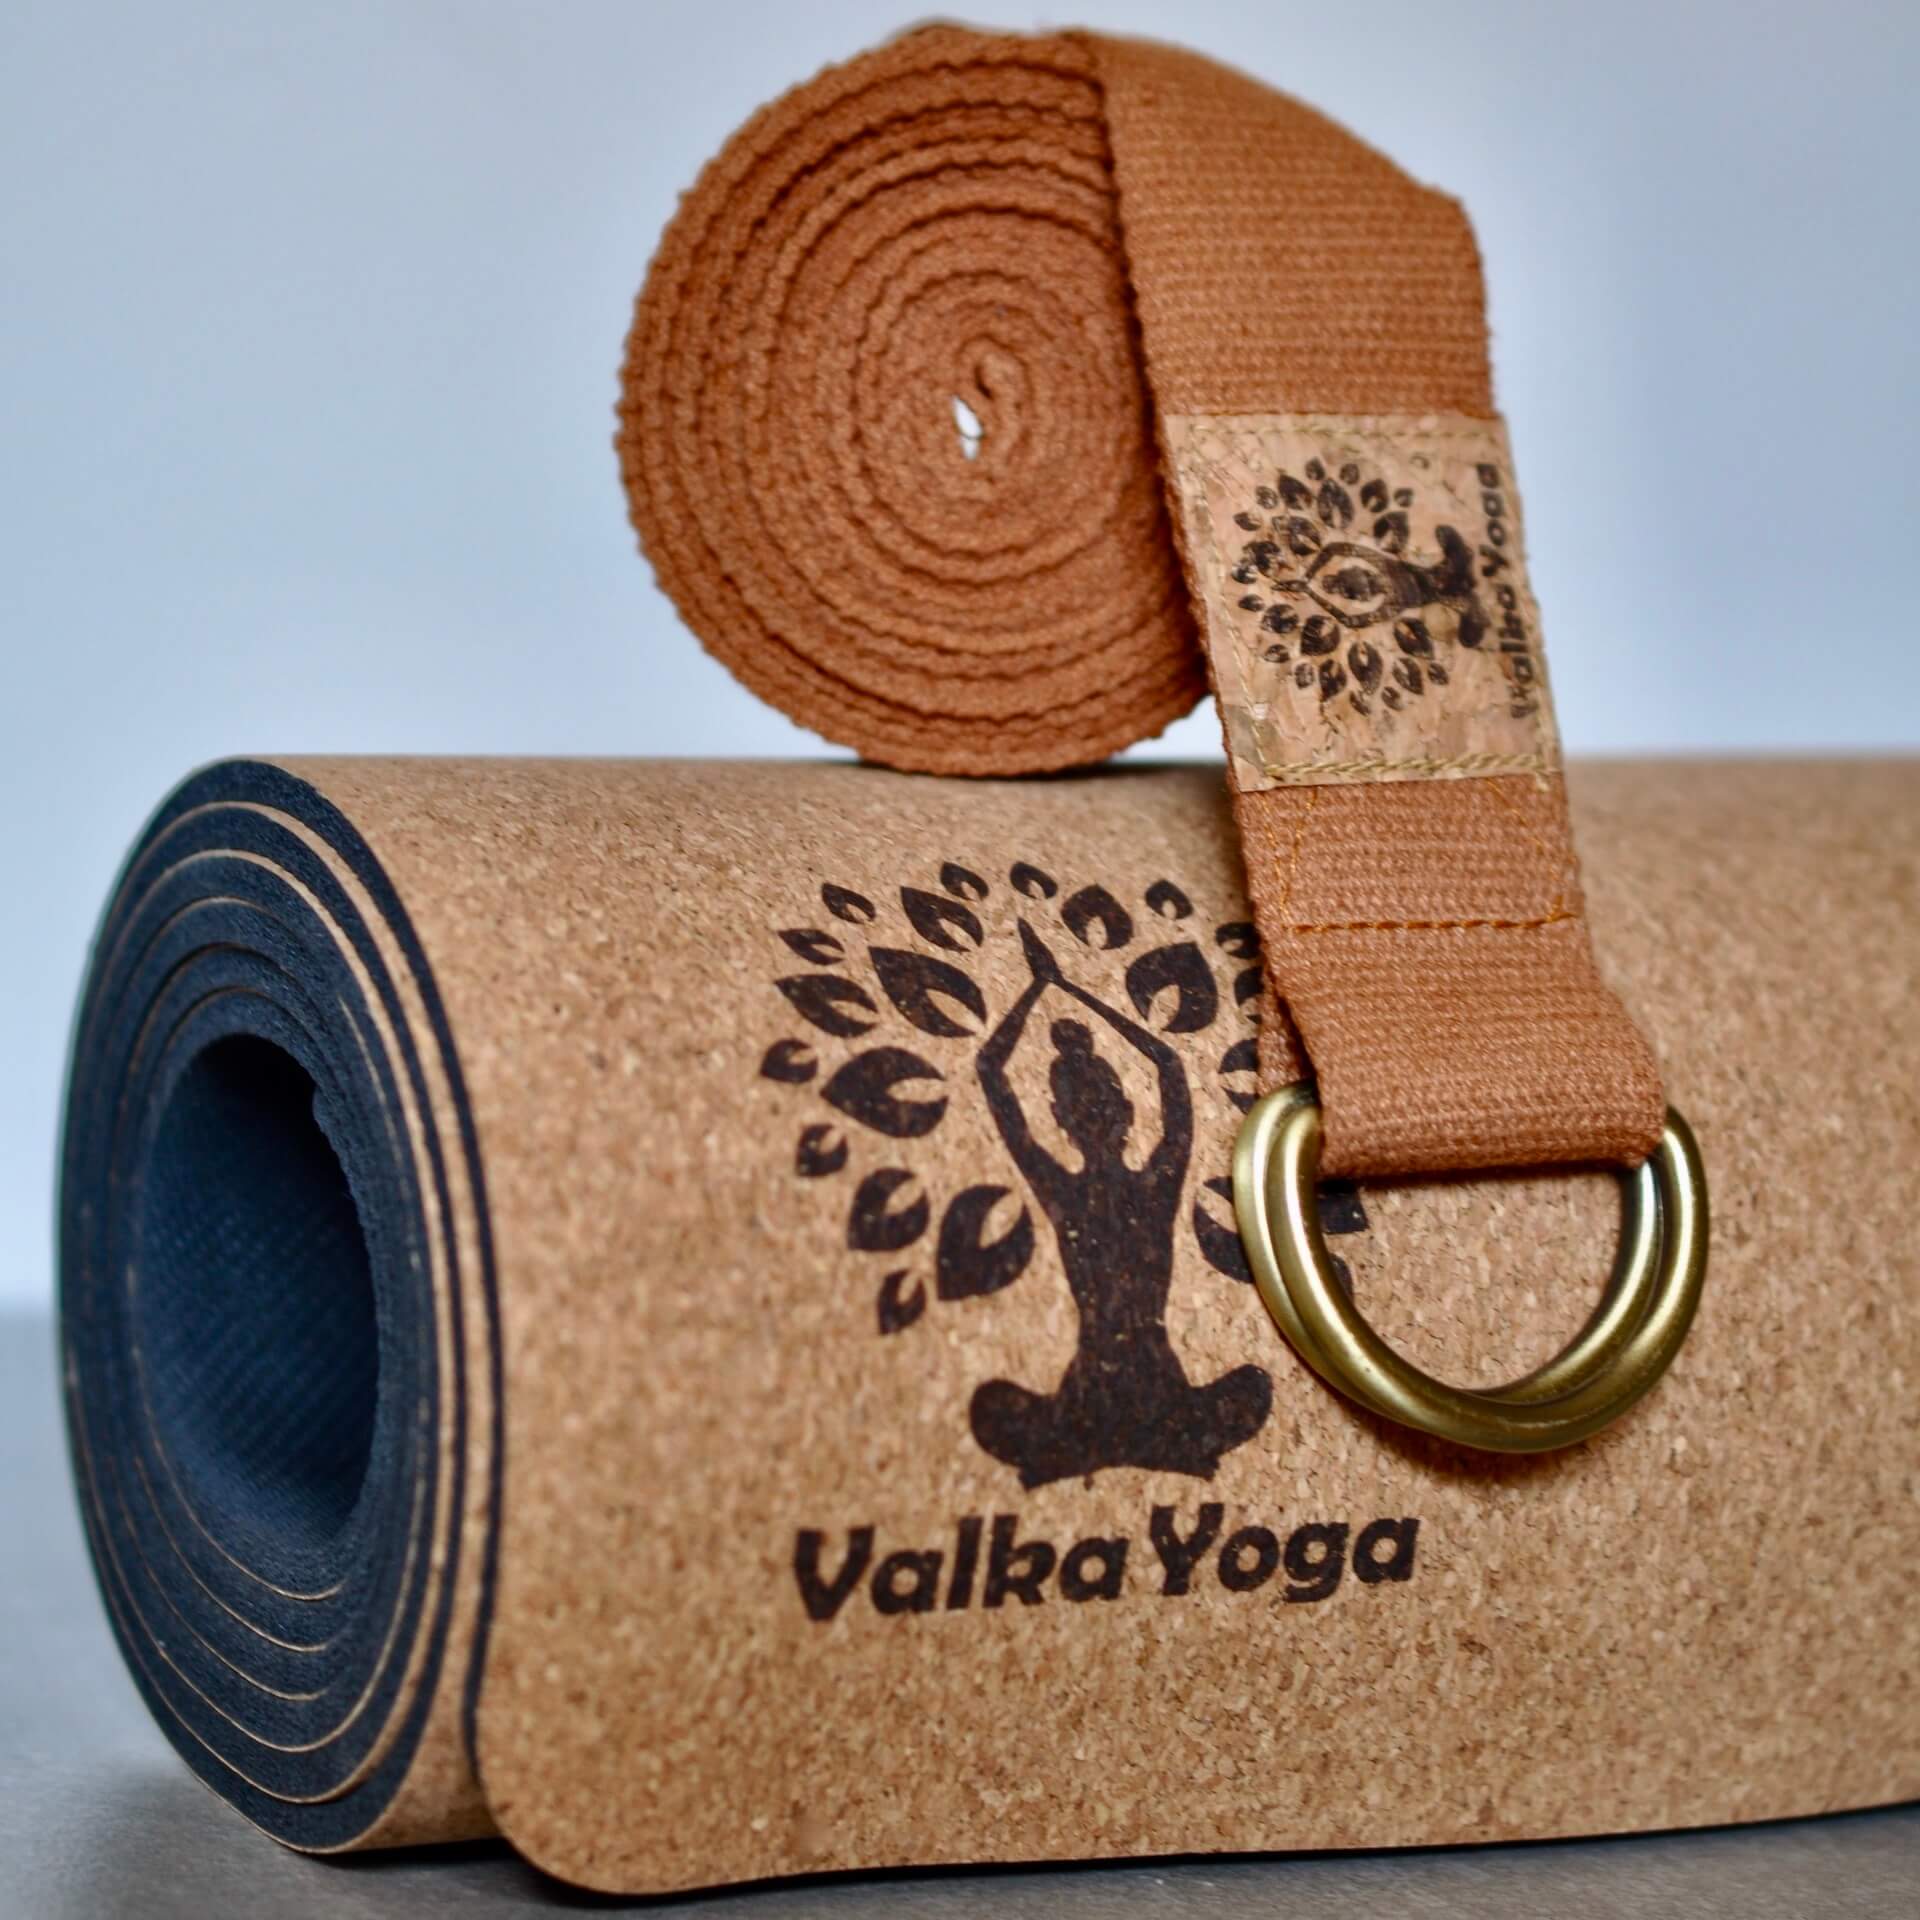 Cork yoga mat and cotton yoga strap bundle